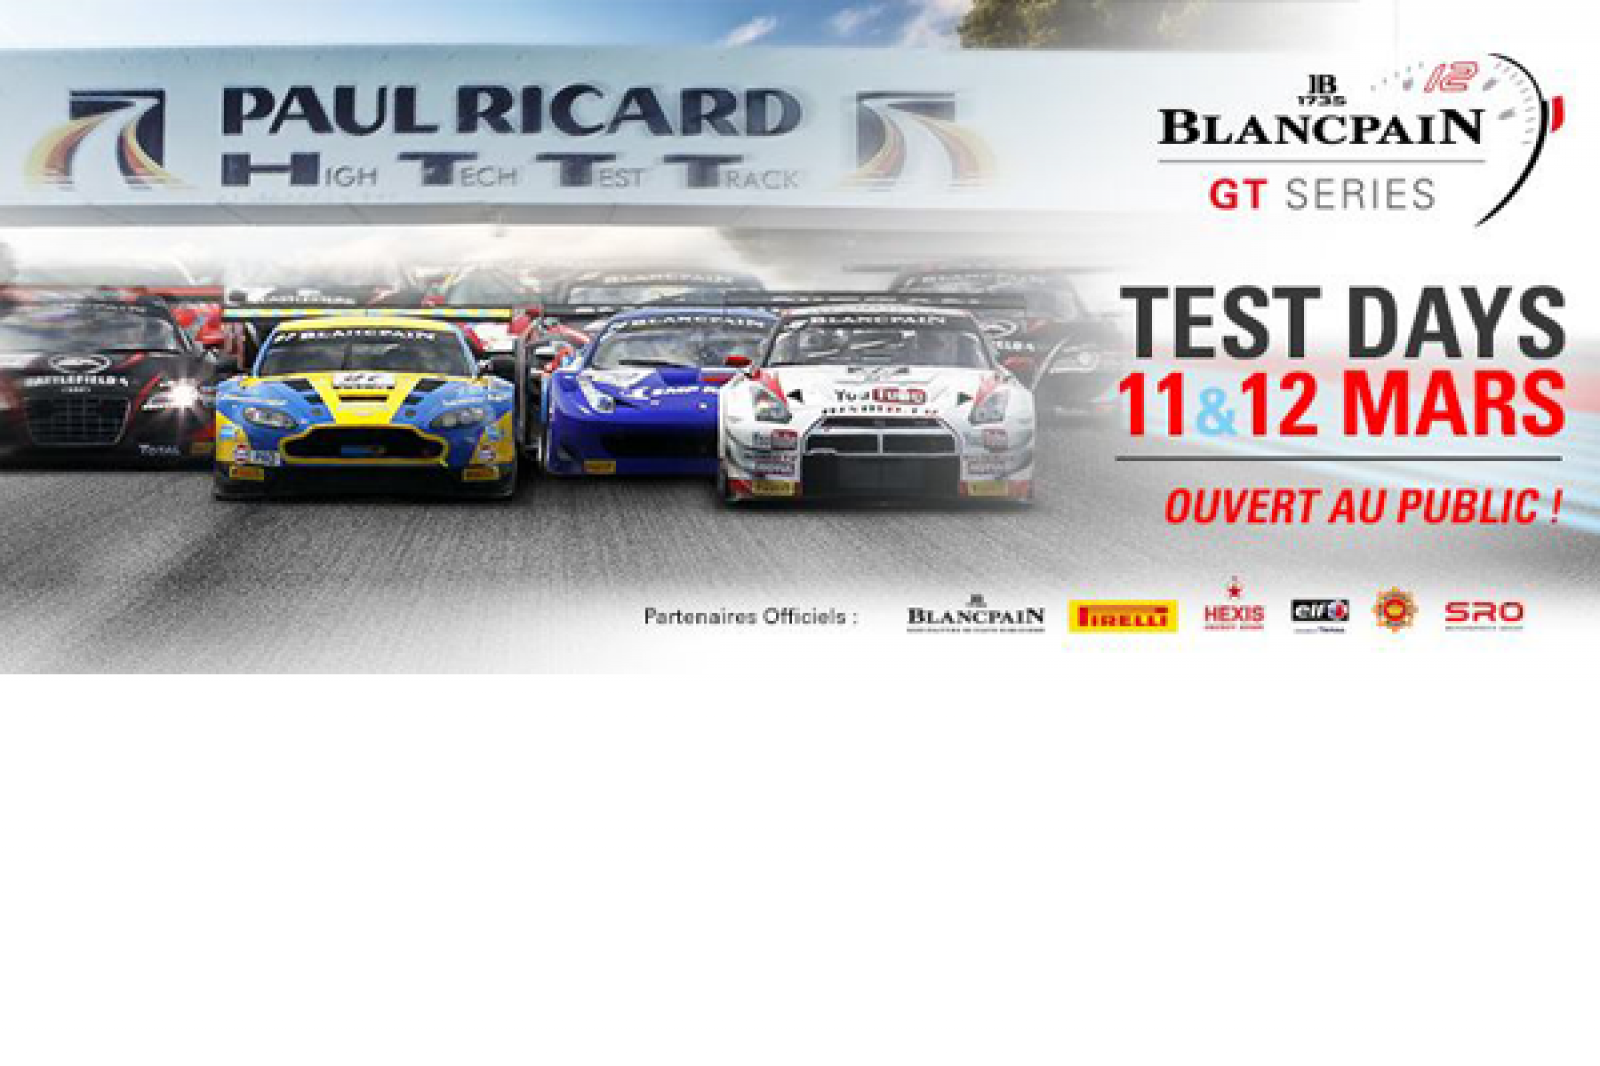 Racing fans get first peek during Blancpain GT Series Test Days